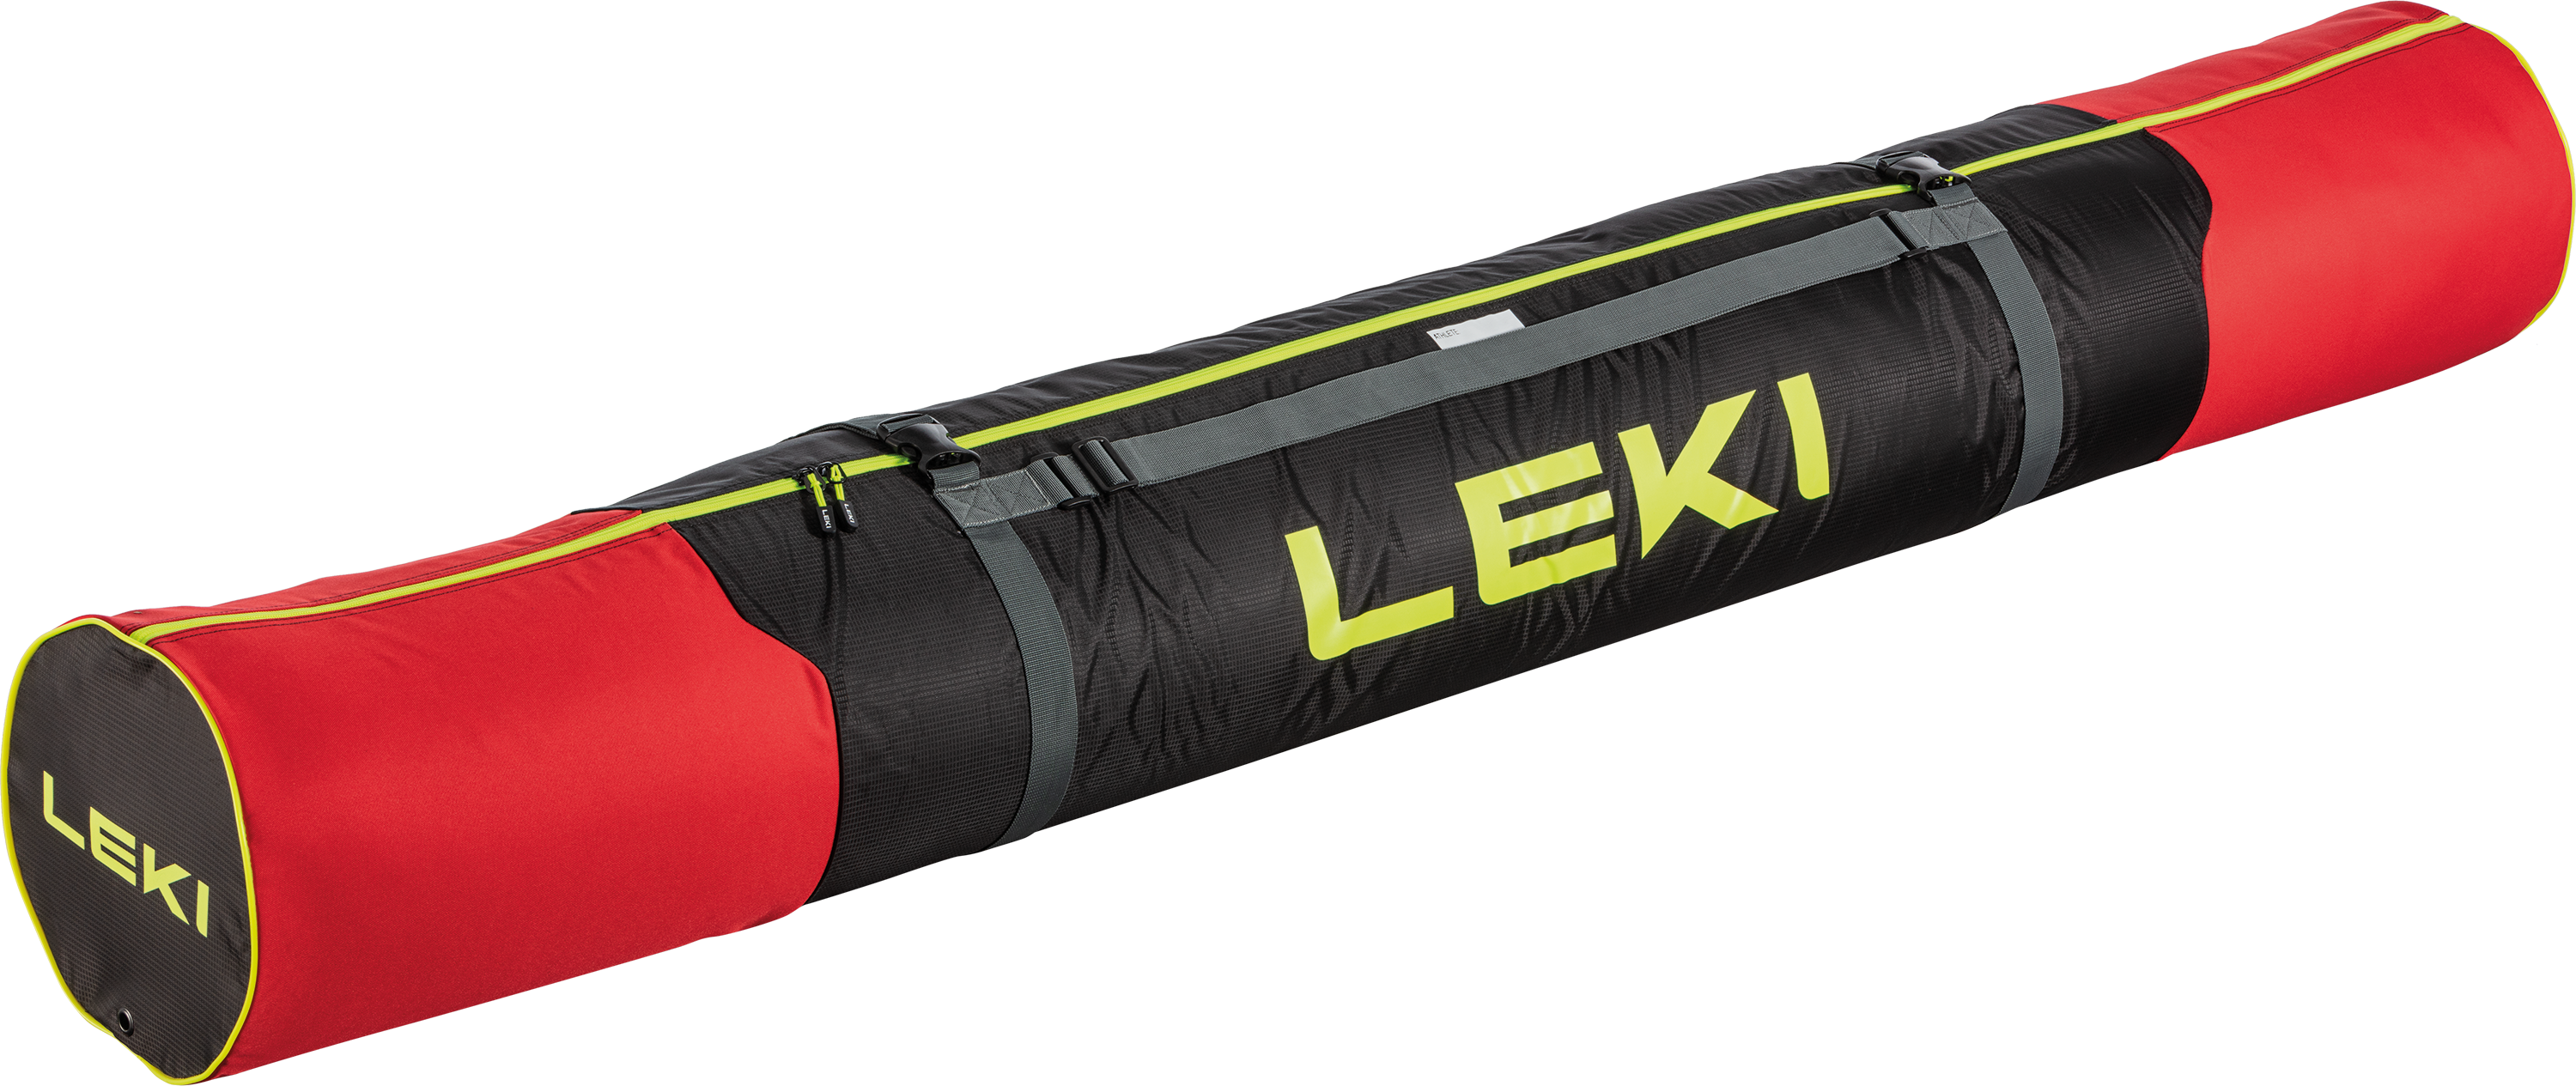 Leki Ski Bag Cross Country 210 - Skitasche für Langlaufski